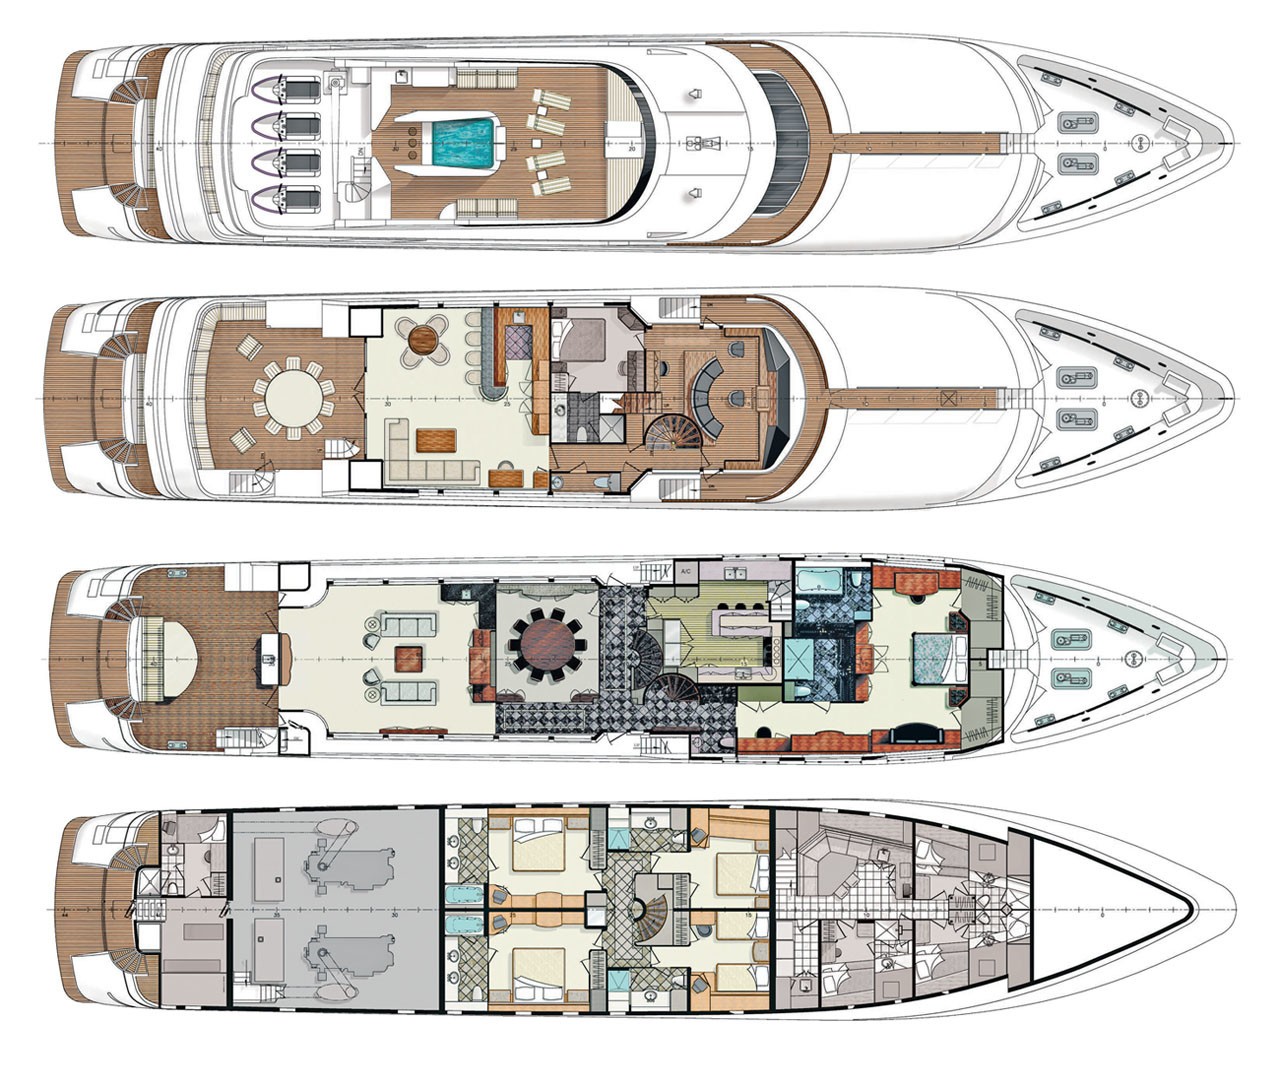 The 45m Yacht ATTITUDE